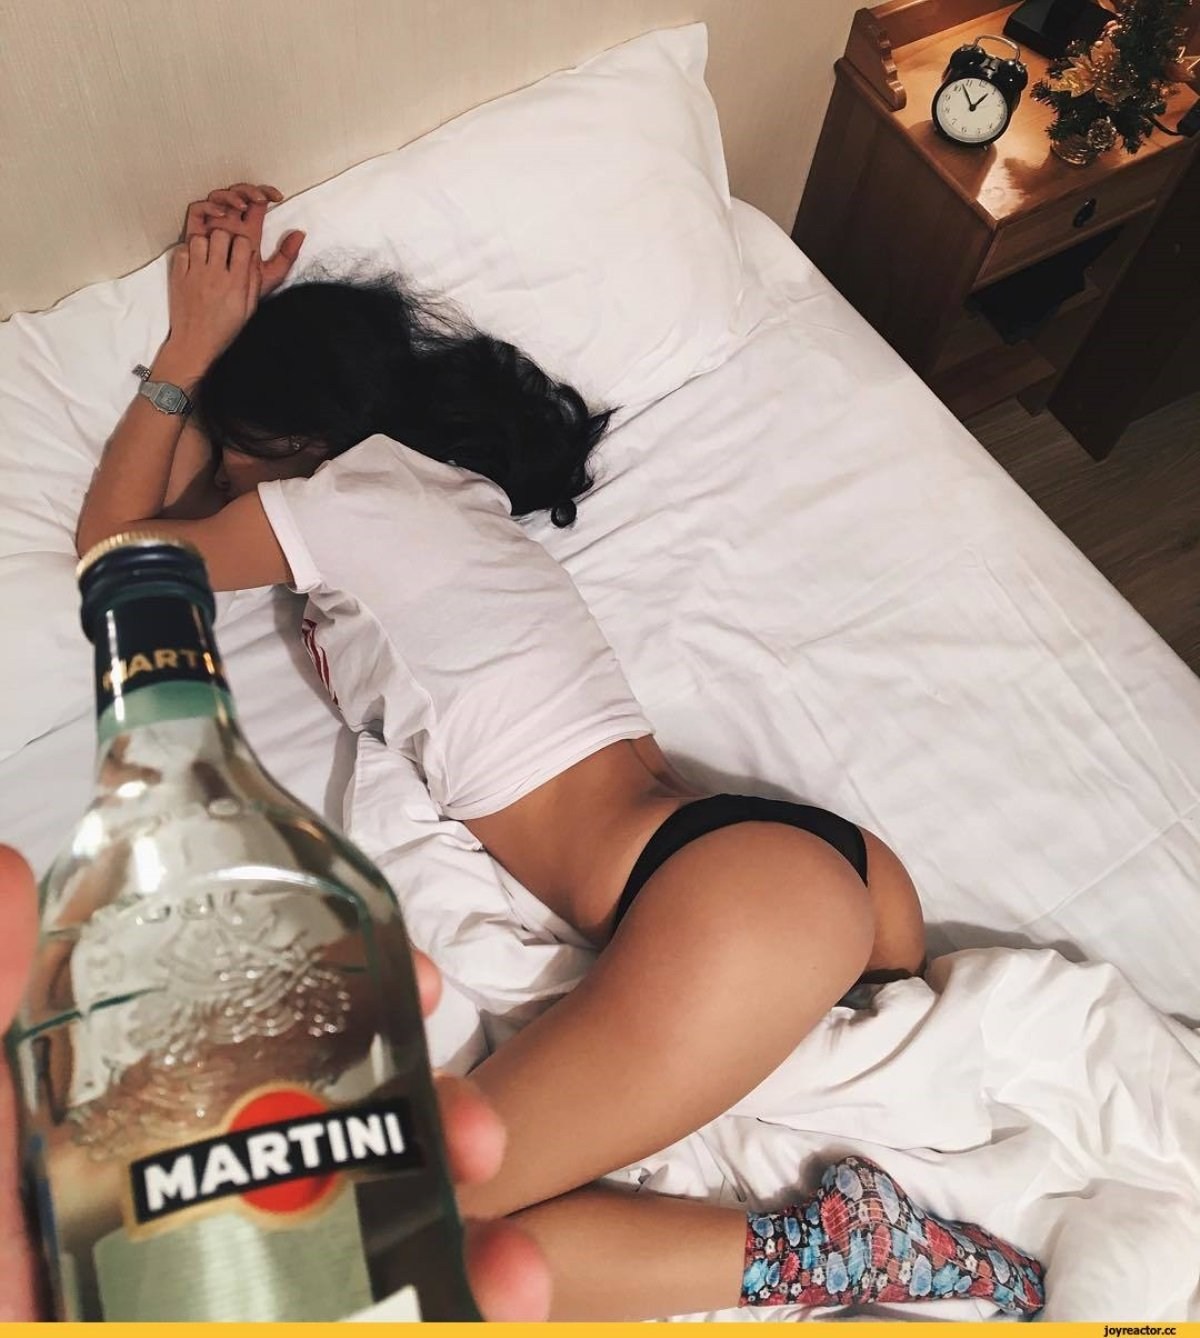 Russian Bum Girls Give Porn for Vodka (71 photos) - sex eporner pics